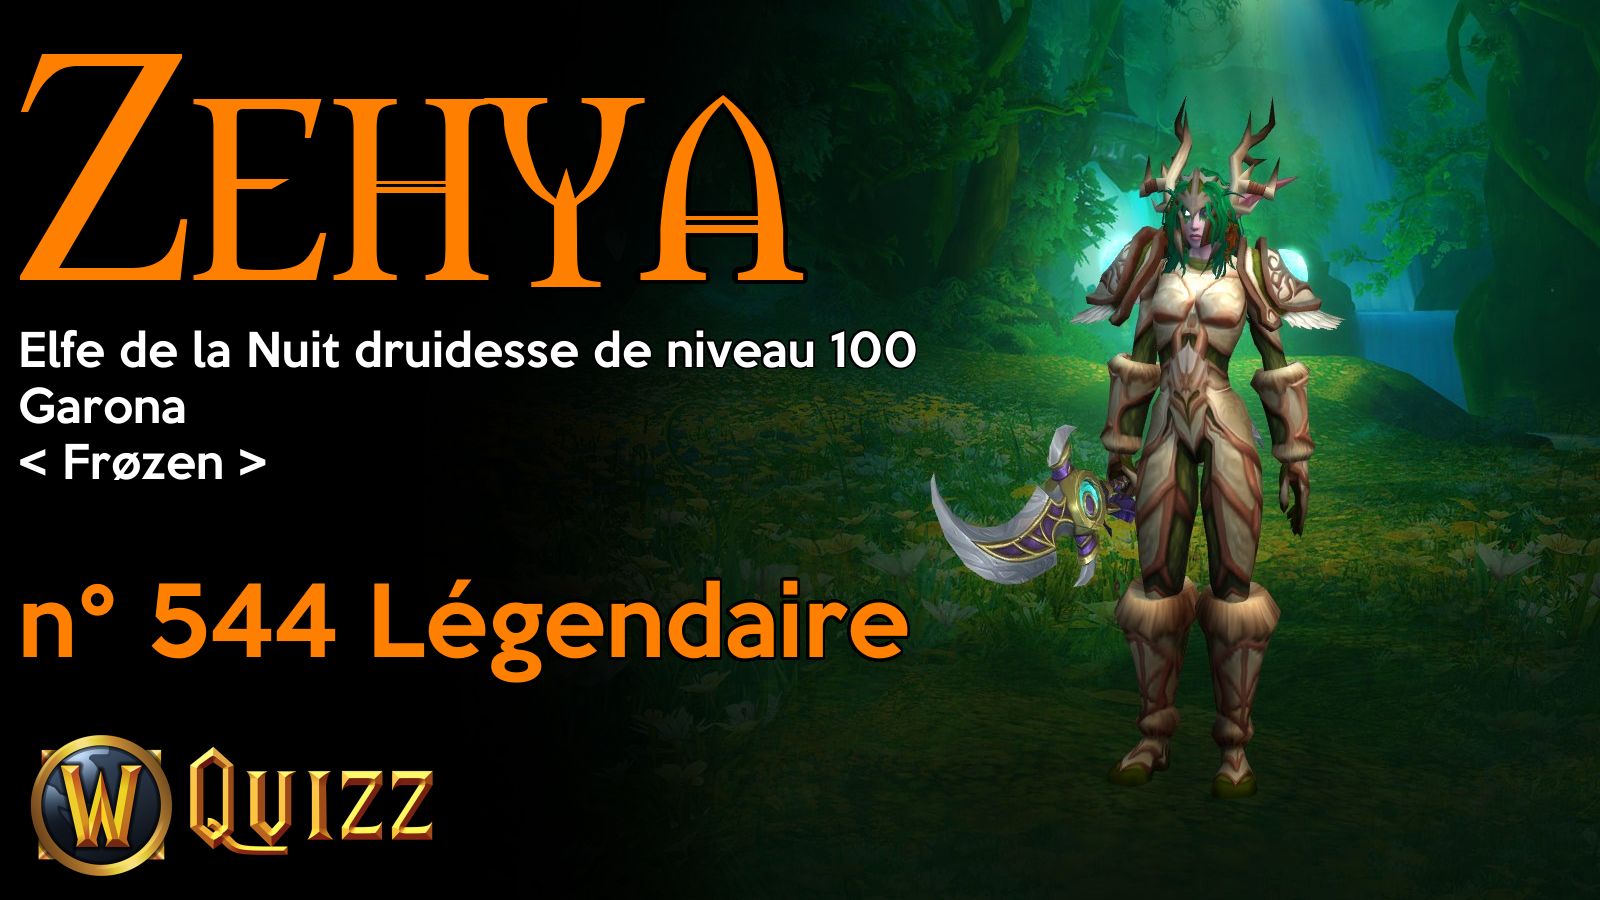 Zehya, Elfe de la Nuit druidesse de niveau 100, Garona